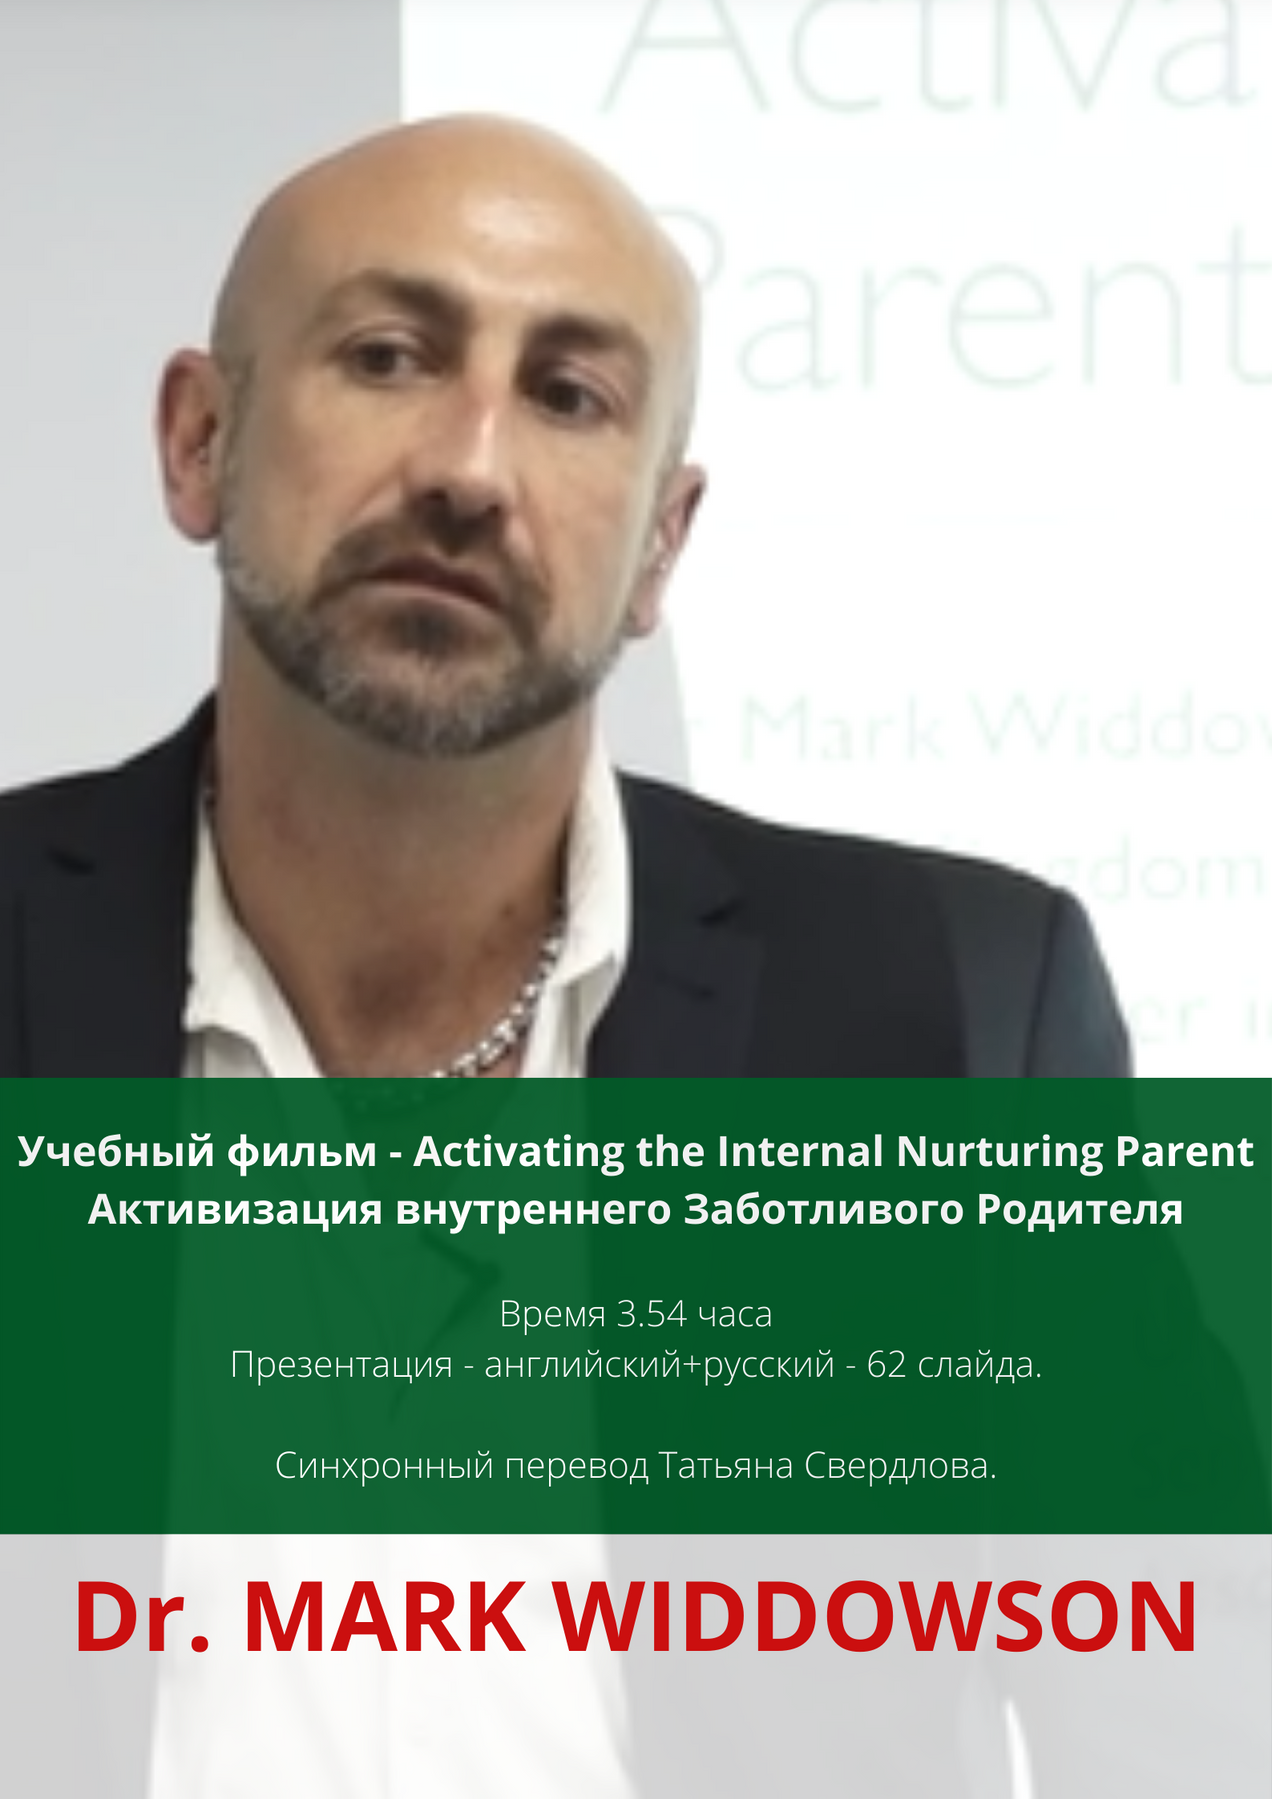 Dr. MARK WIDDOWSON "Activating the Internal Nurturing Parent" Активізація внутрішнього Дбайливого Батька  